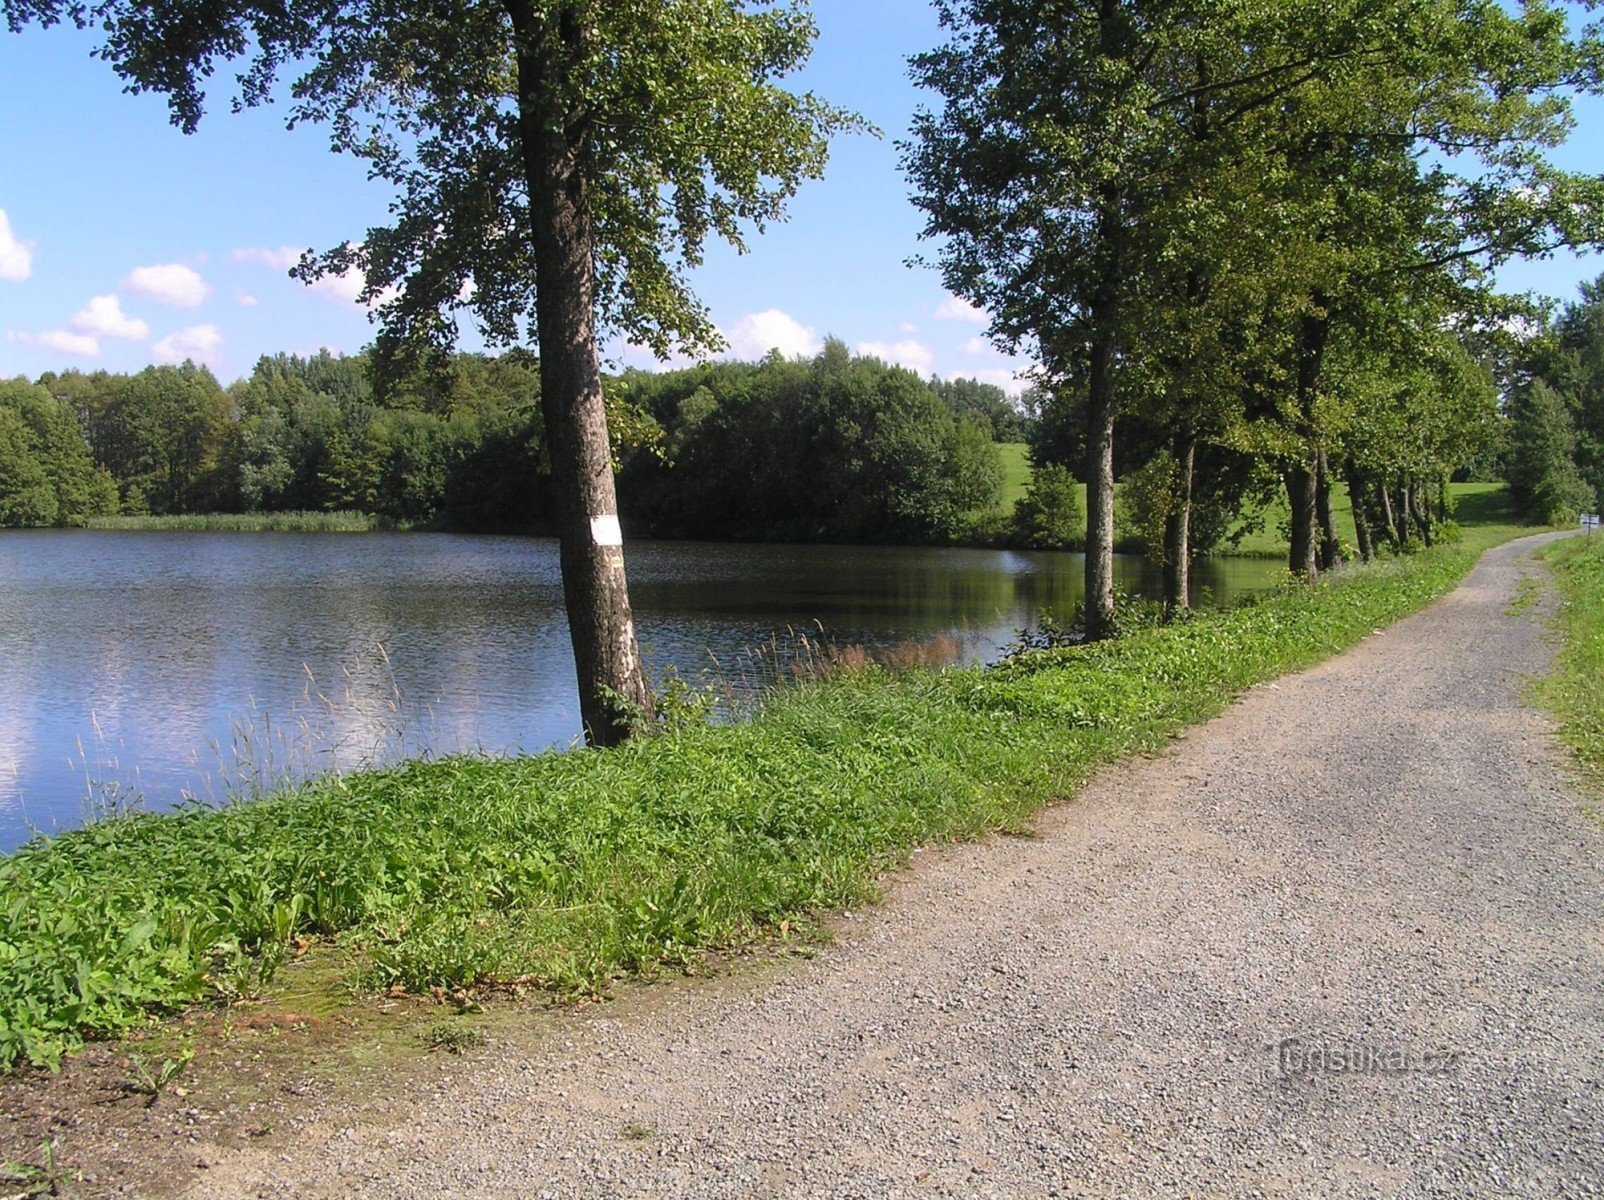 Seguire il sentiero giallo da Štíte intorno allo stagno fino a Horní Studénék.